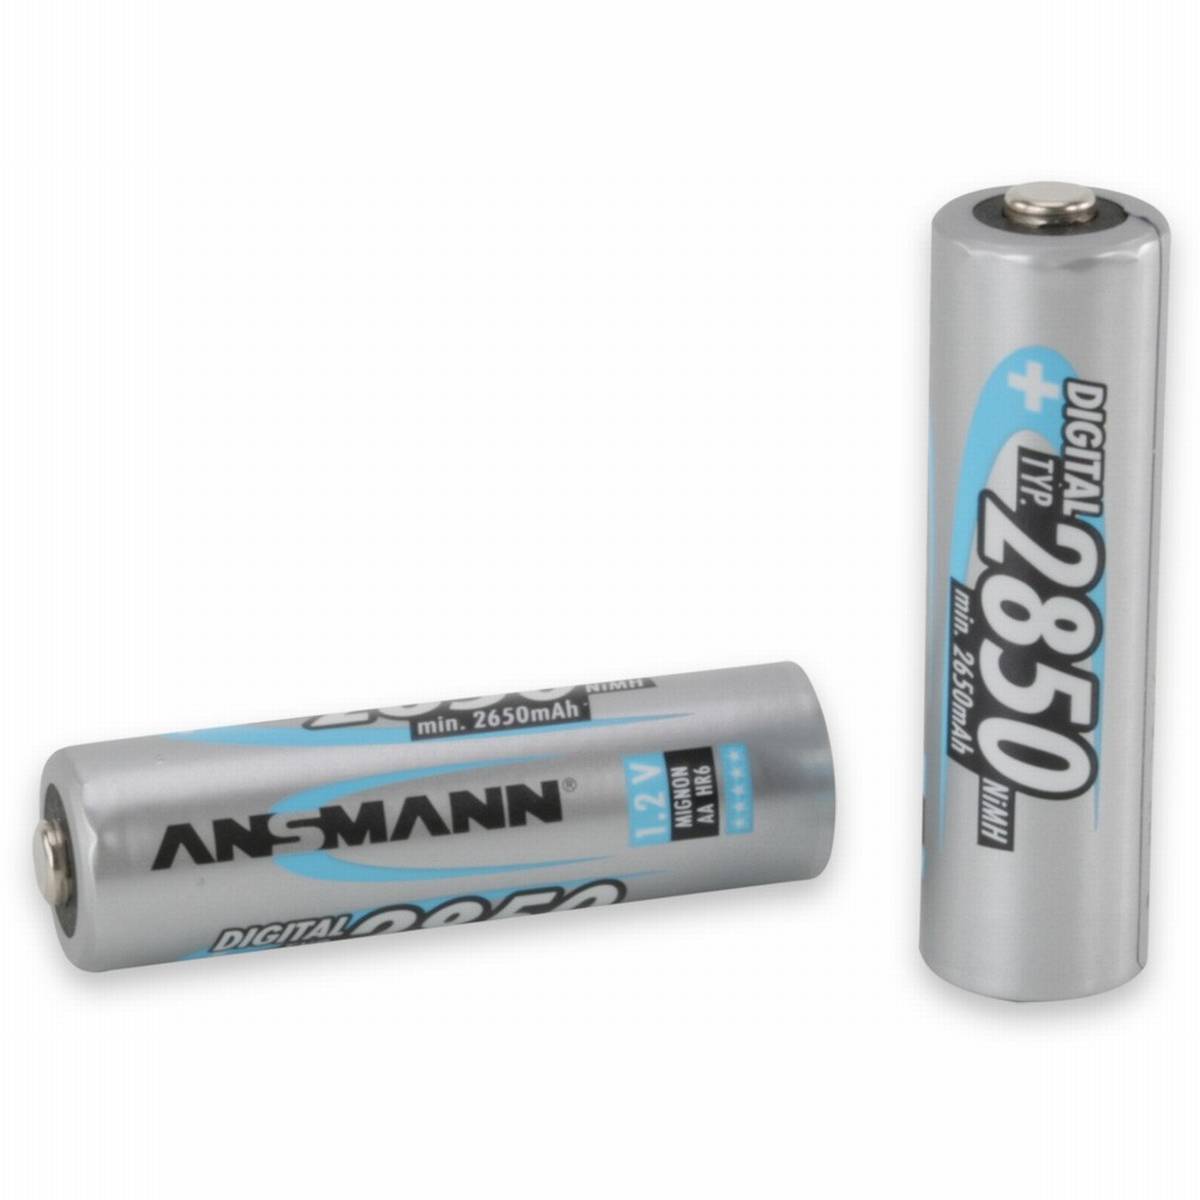 Ansmann 5035021 Digital HR6 NiMH Mignon AA batteria ricaricabile 1.2V 2850mAh 50 pezzi (scatola)